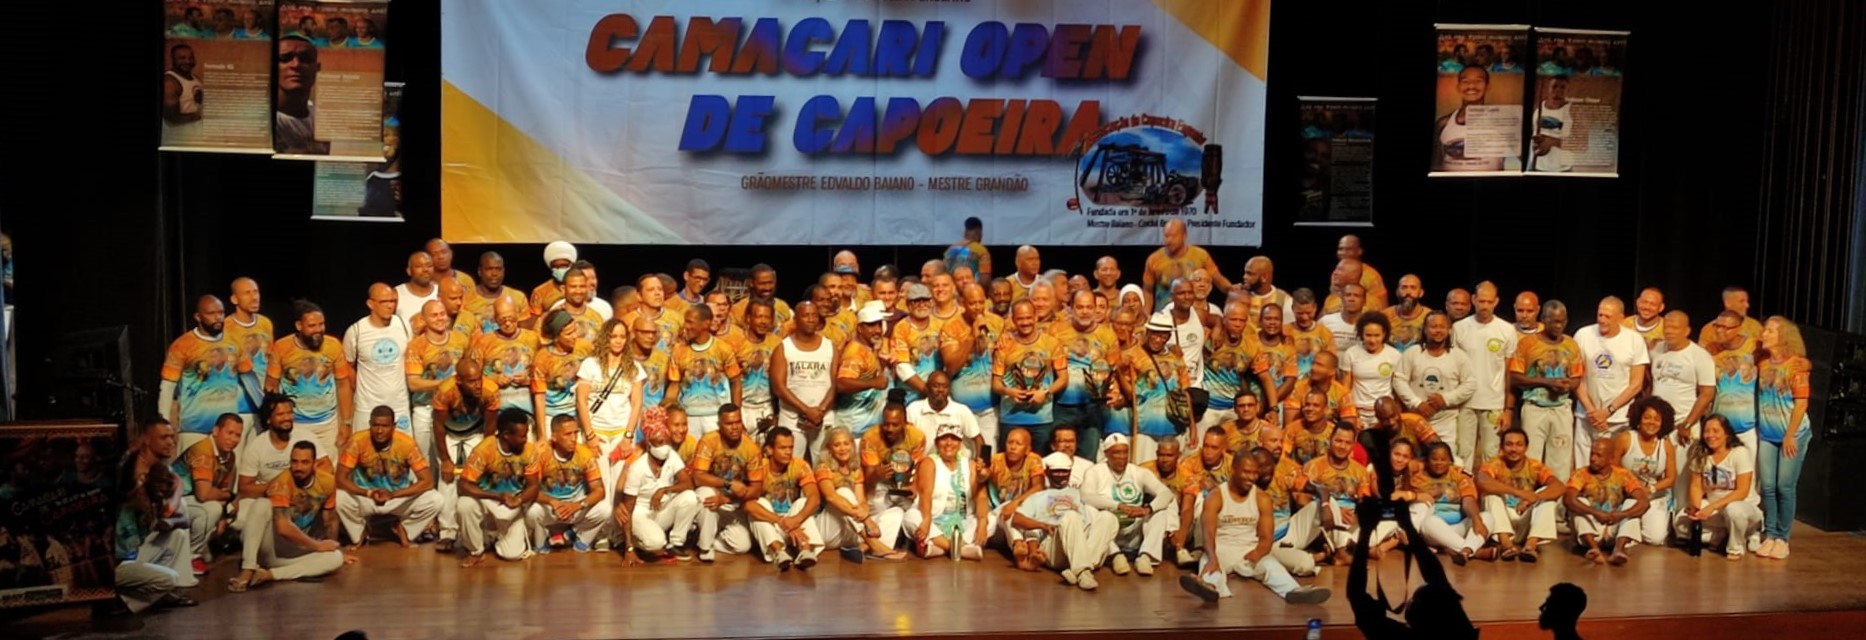 Camaçari Open de Capoeira